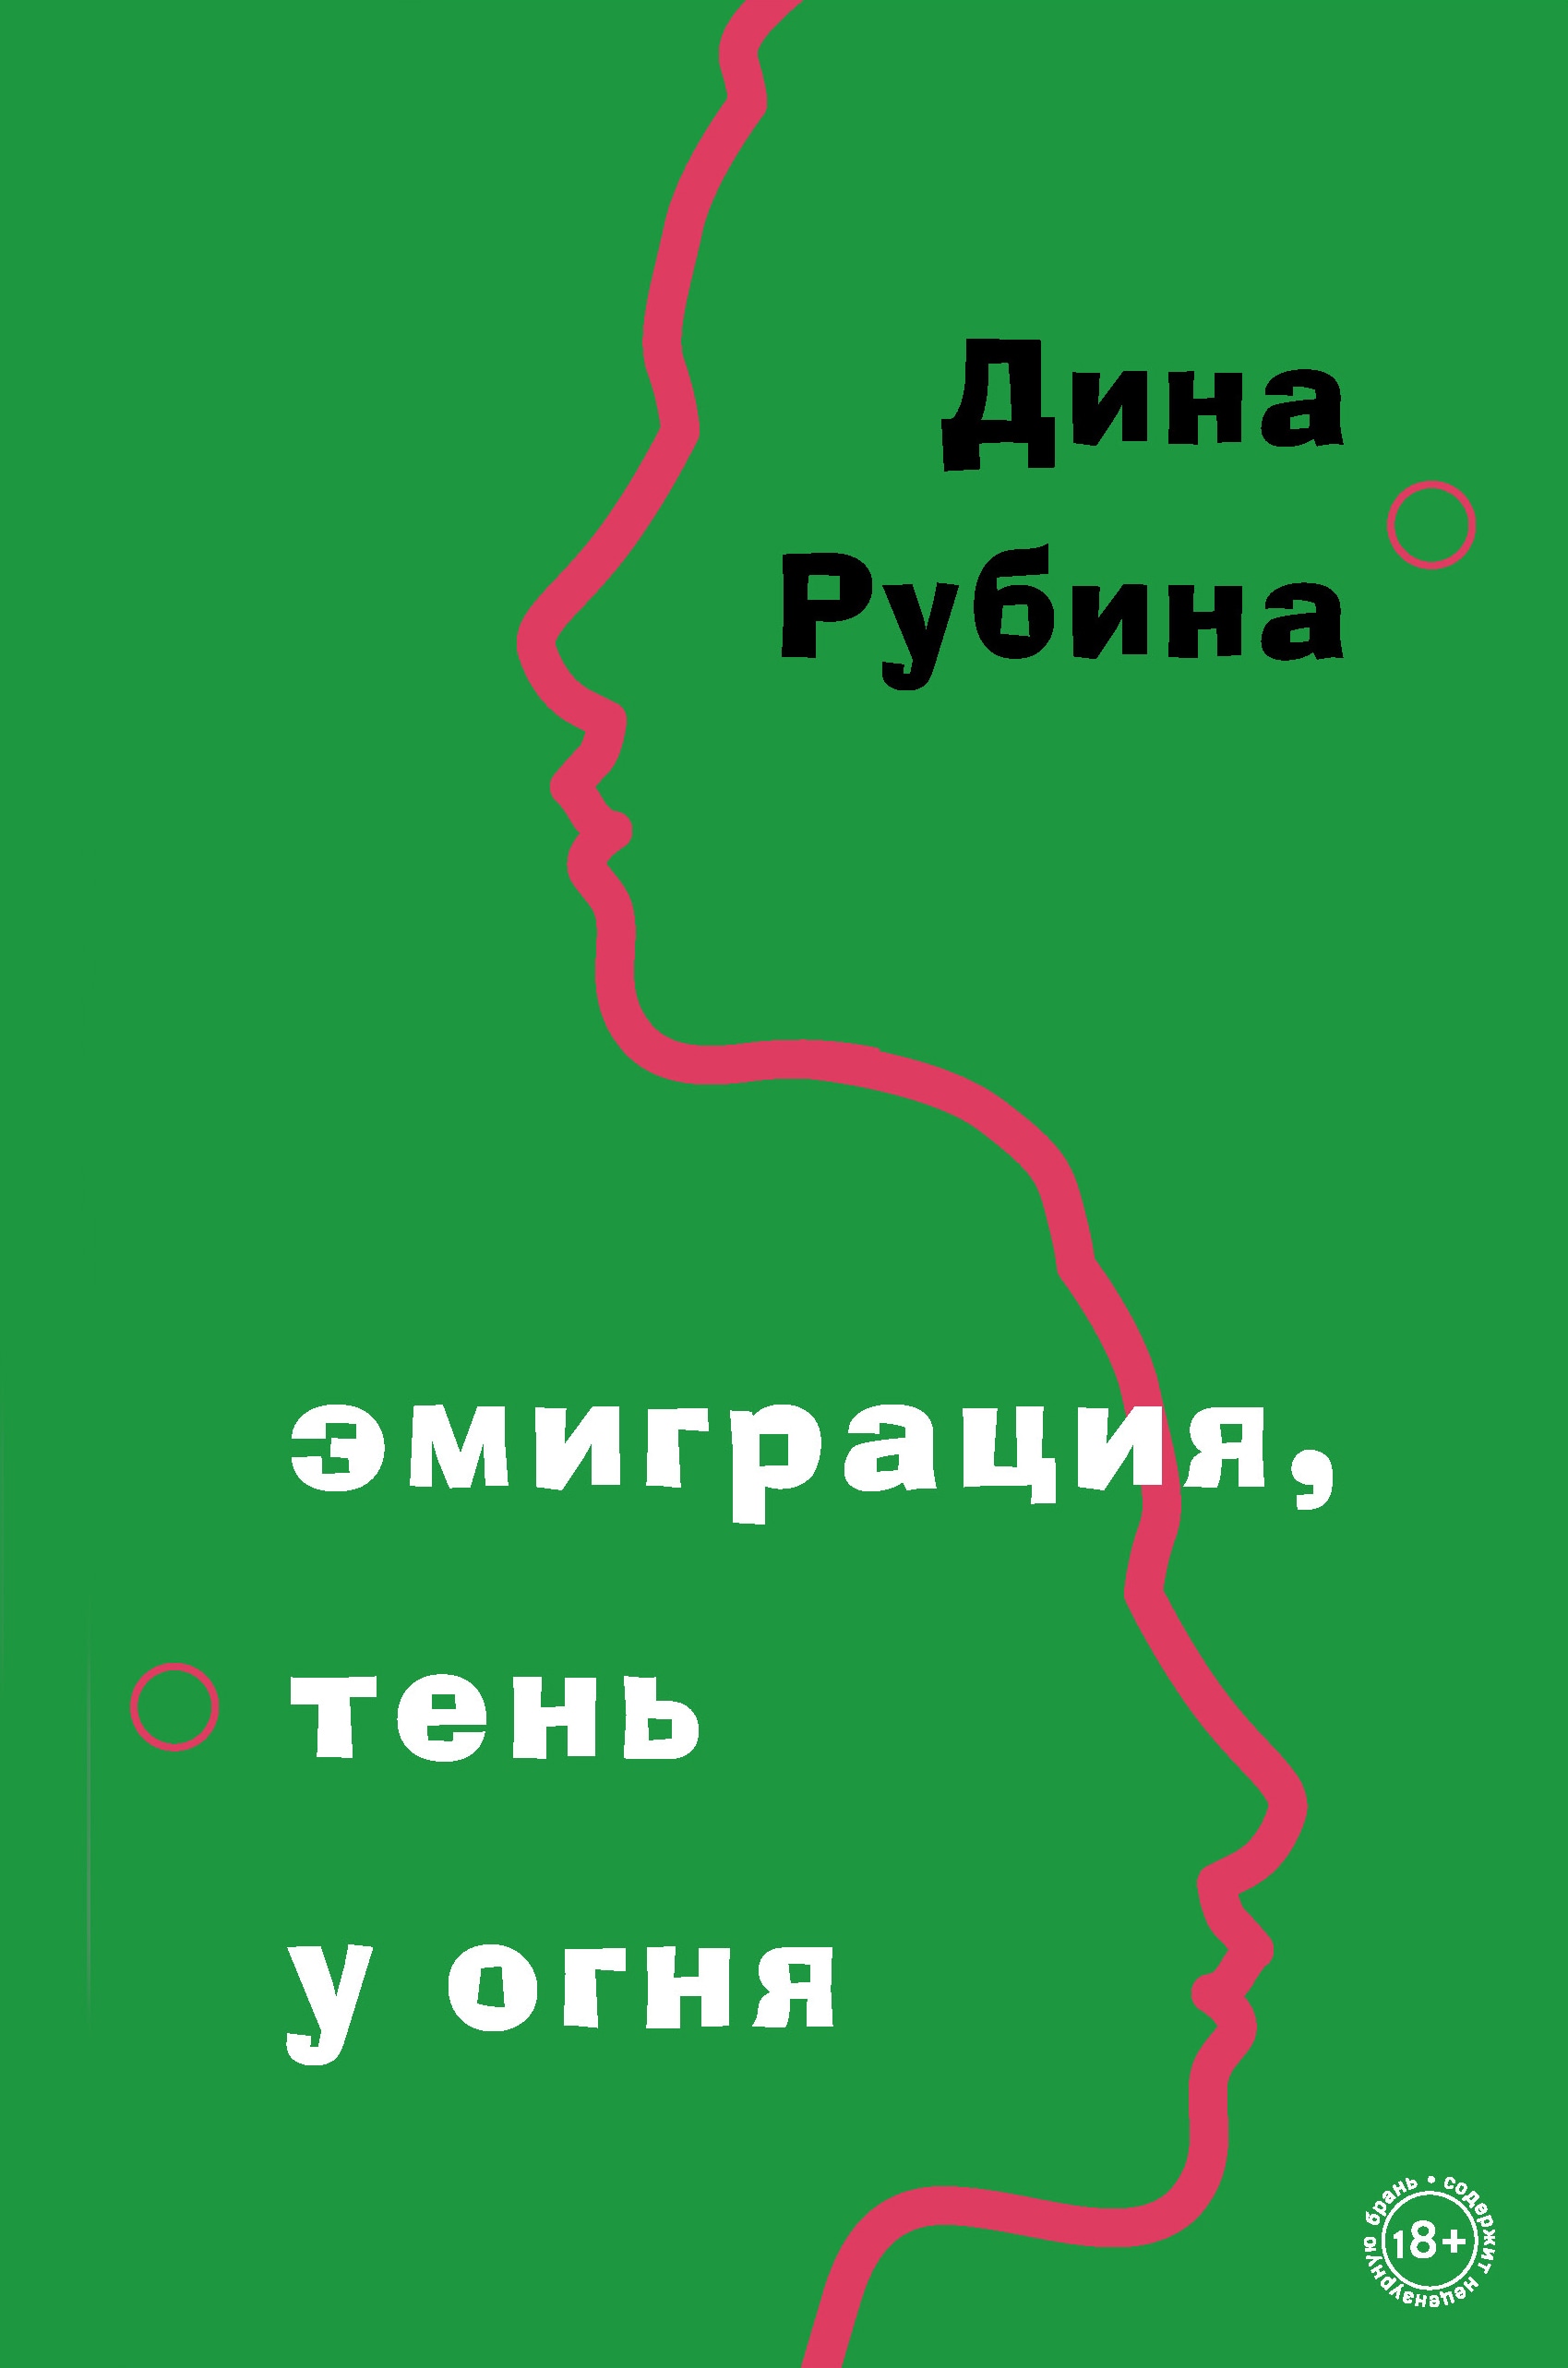 Book “Эмиграция, тень у огня” by Дина Рубина — November 29, 2022